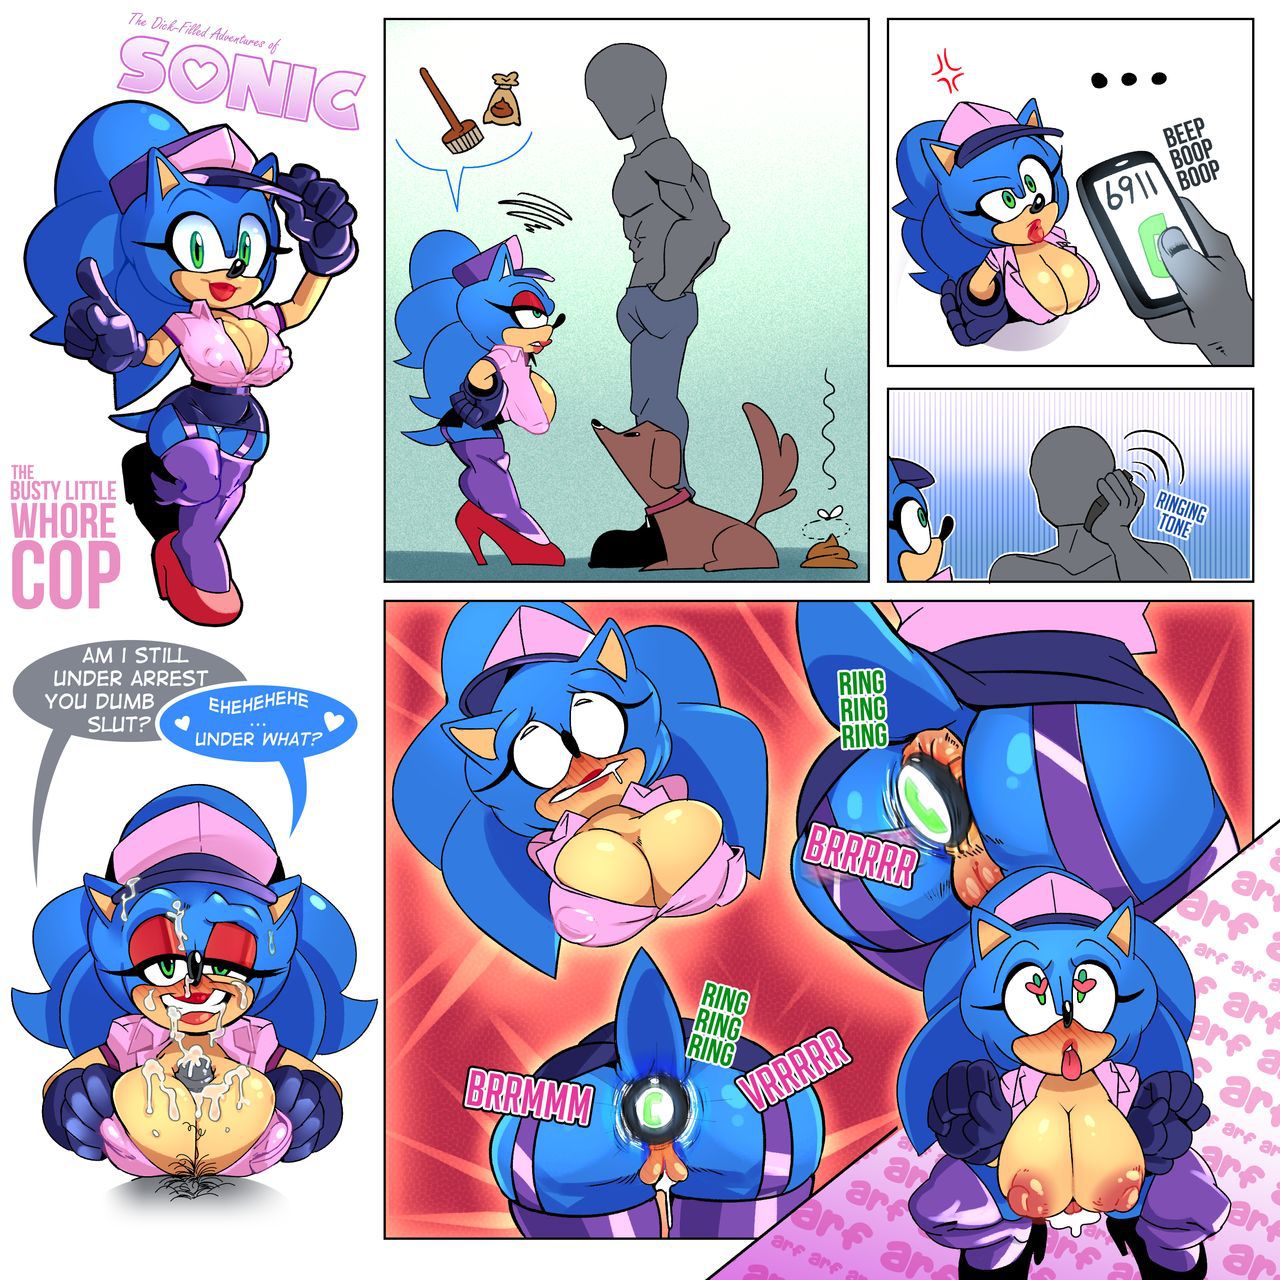 [Cuisine] Adventures of Whore Cop (Sonic The Hedgehog) 6